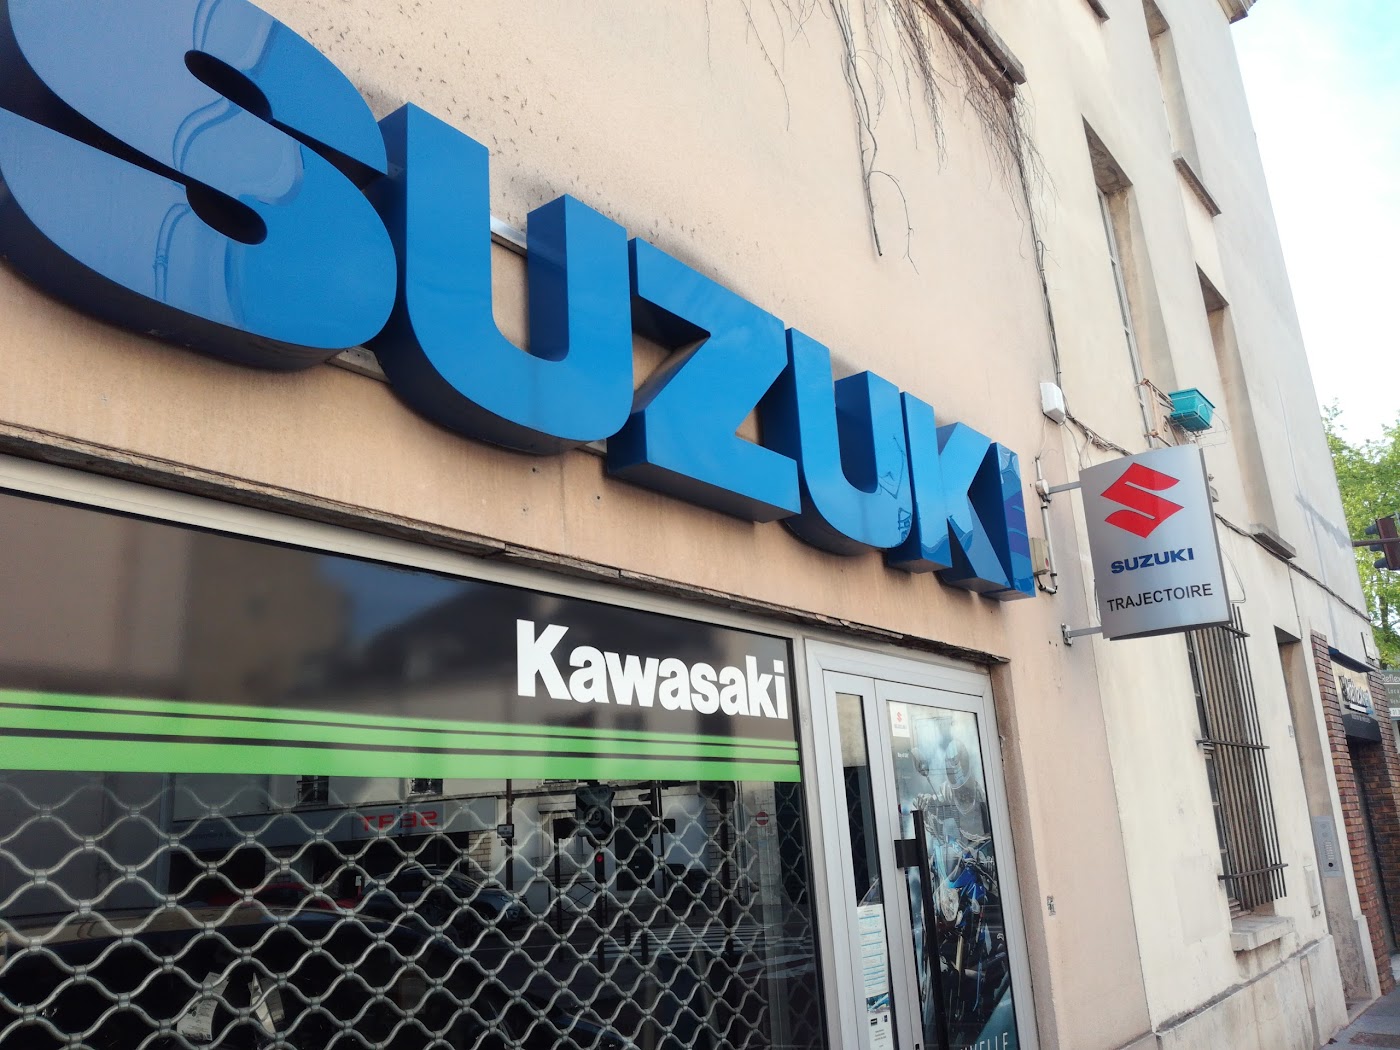 Trajectoire | Concession moto Suzuki, Kawasaki | Accessoires Moto | Atelier réparation